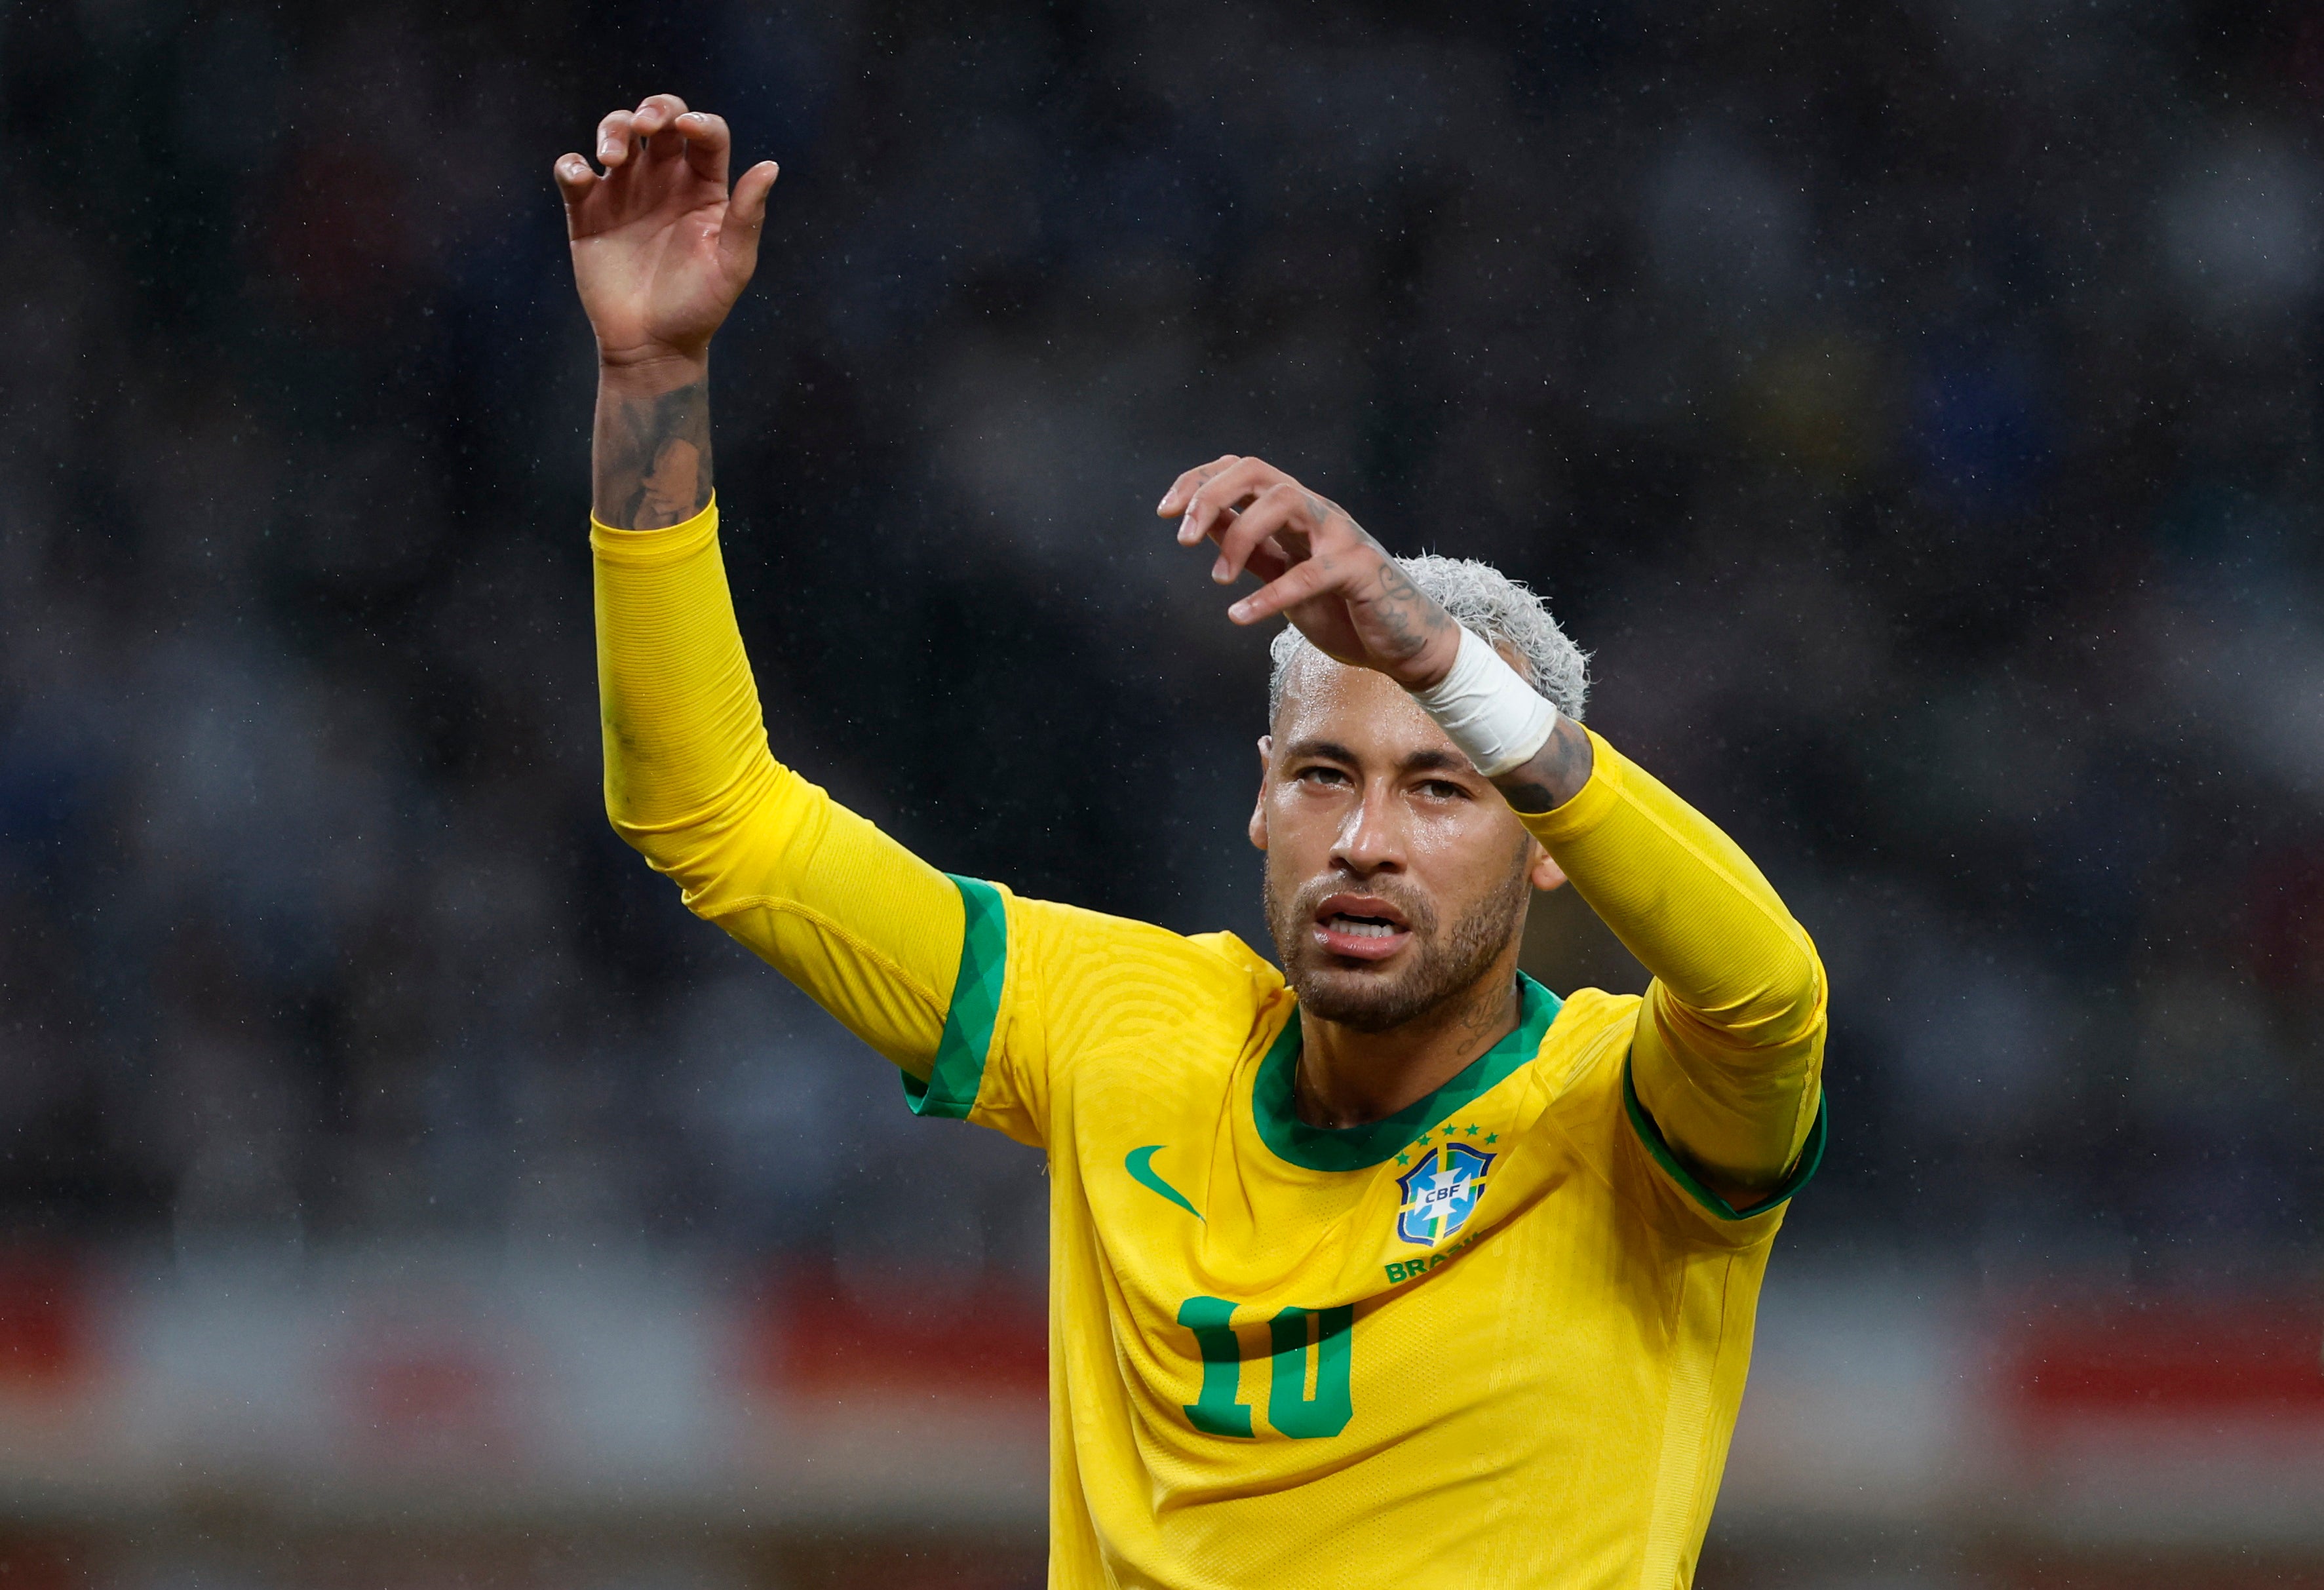 Neymar was Brazil’s top scorer in World Cup qualifying